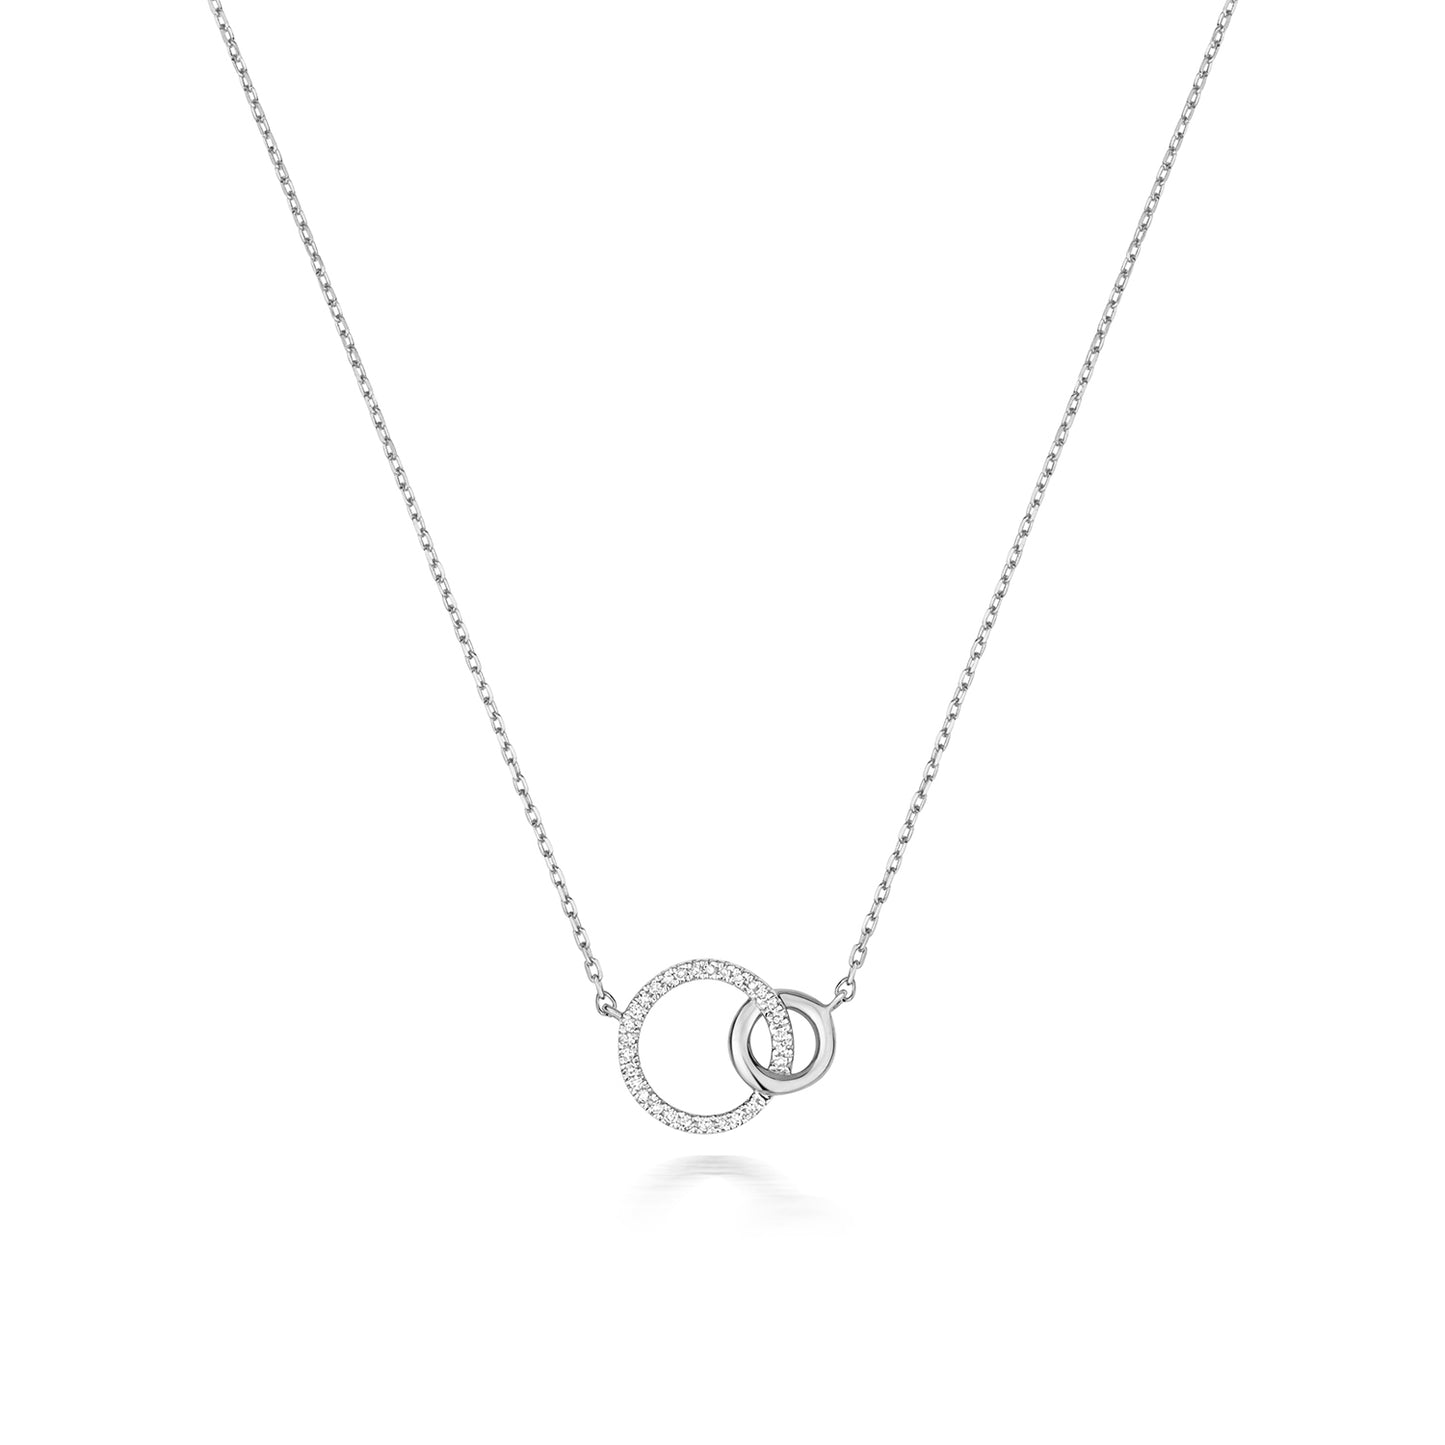 Interlocking Circle Pendant Necklace, 9ct White Gold with diamonds